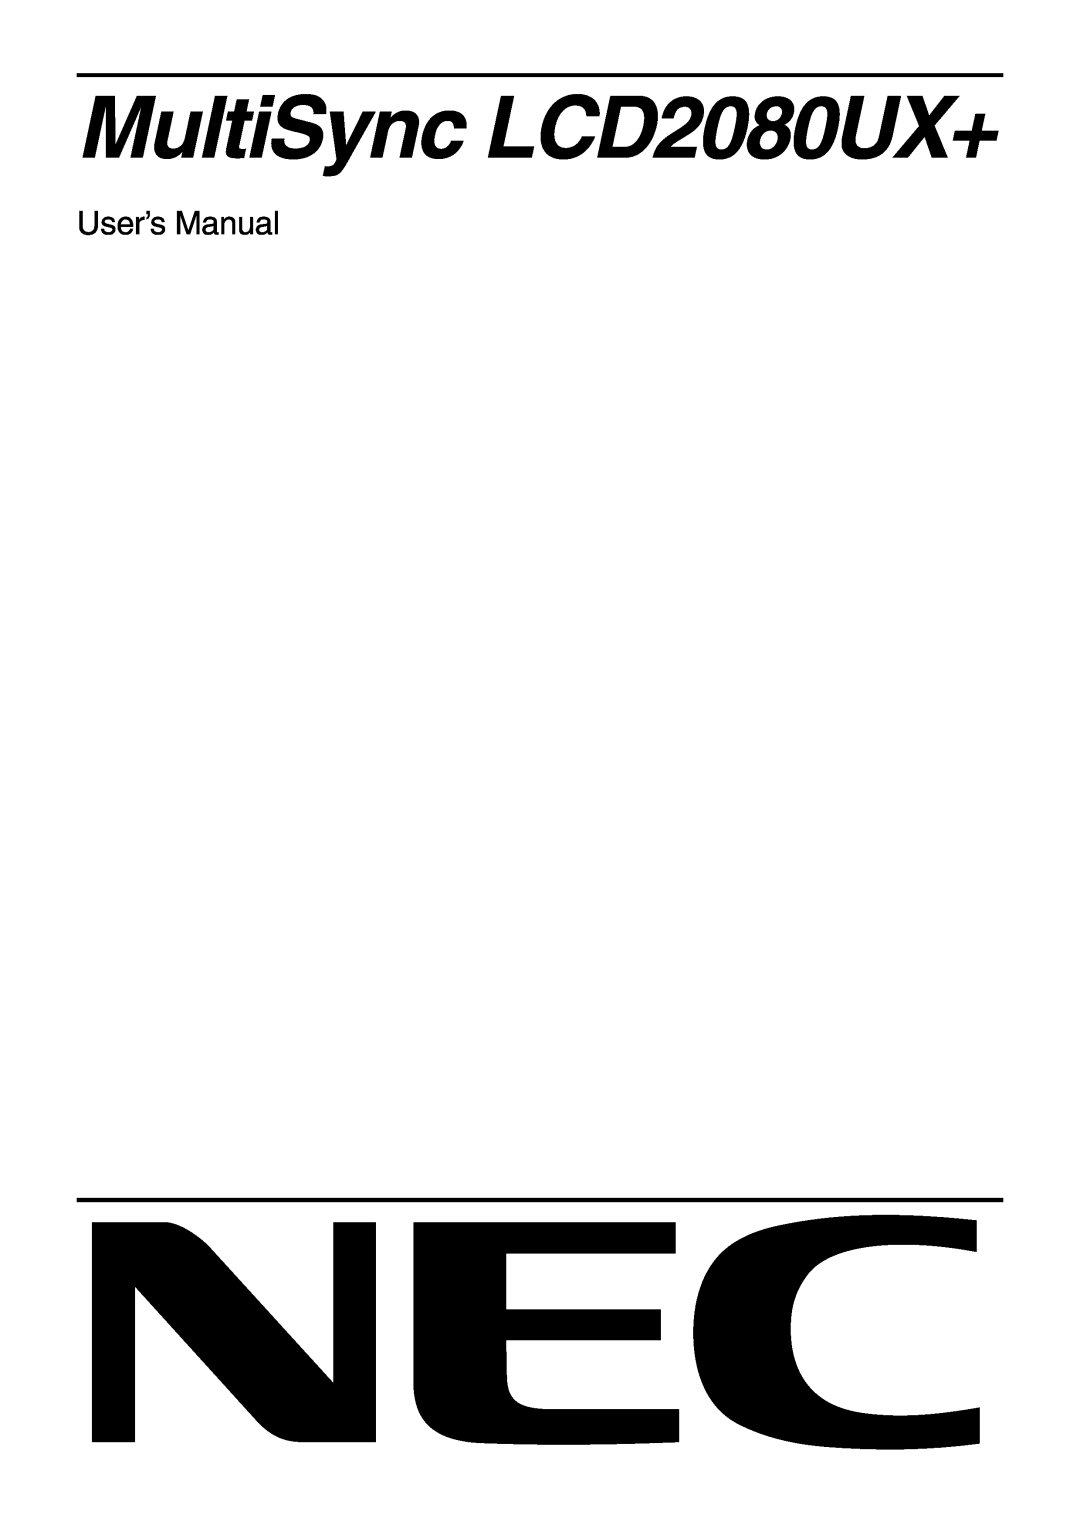 NEC user manual MultiSync LCD2080UX+, User’s Manual 